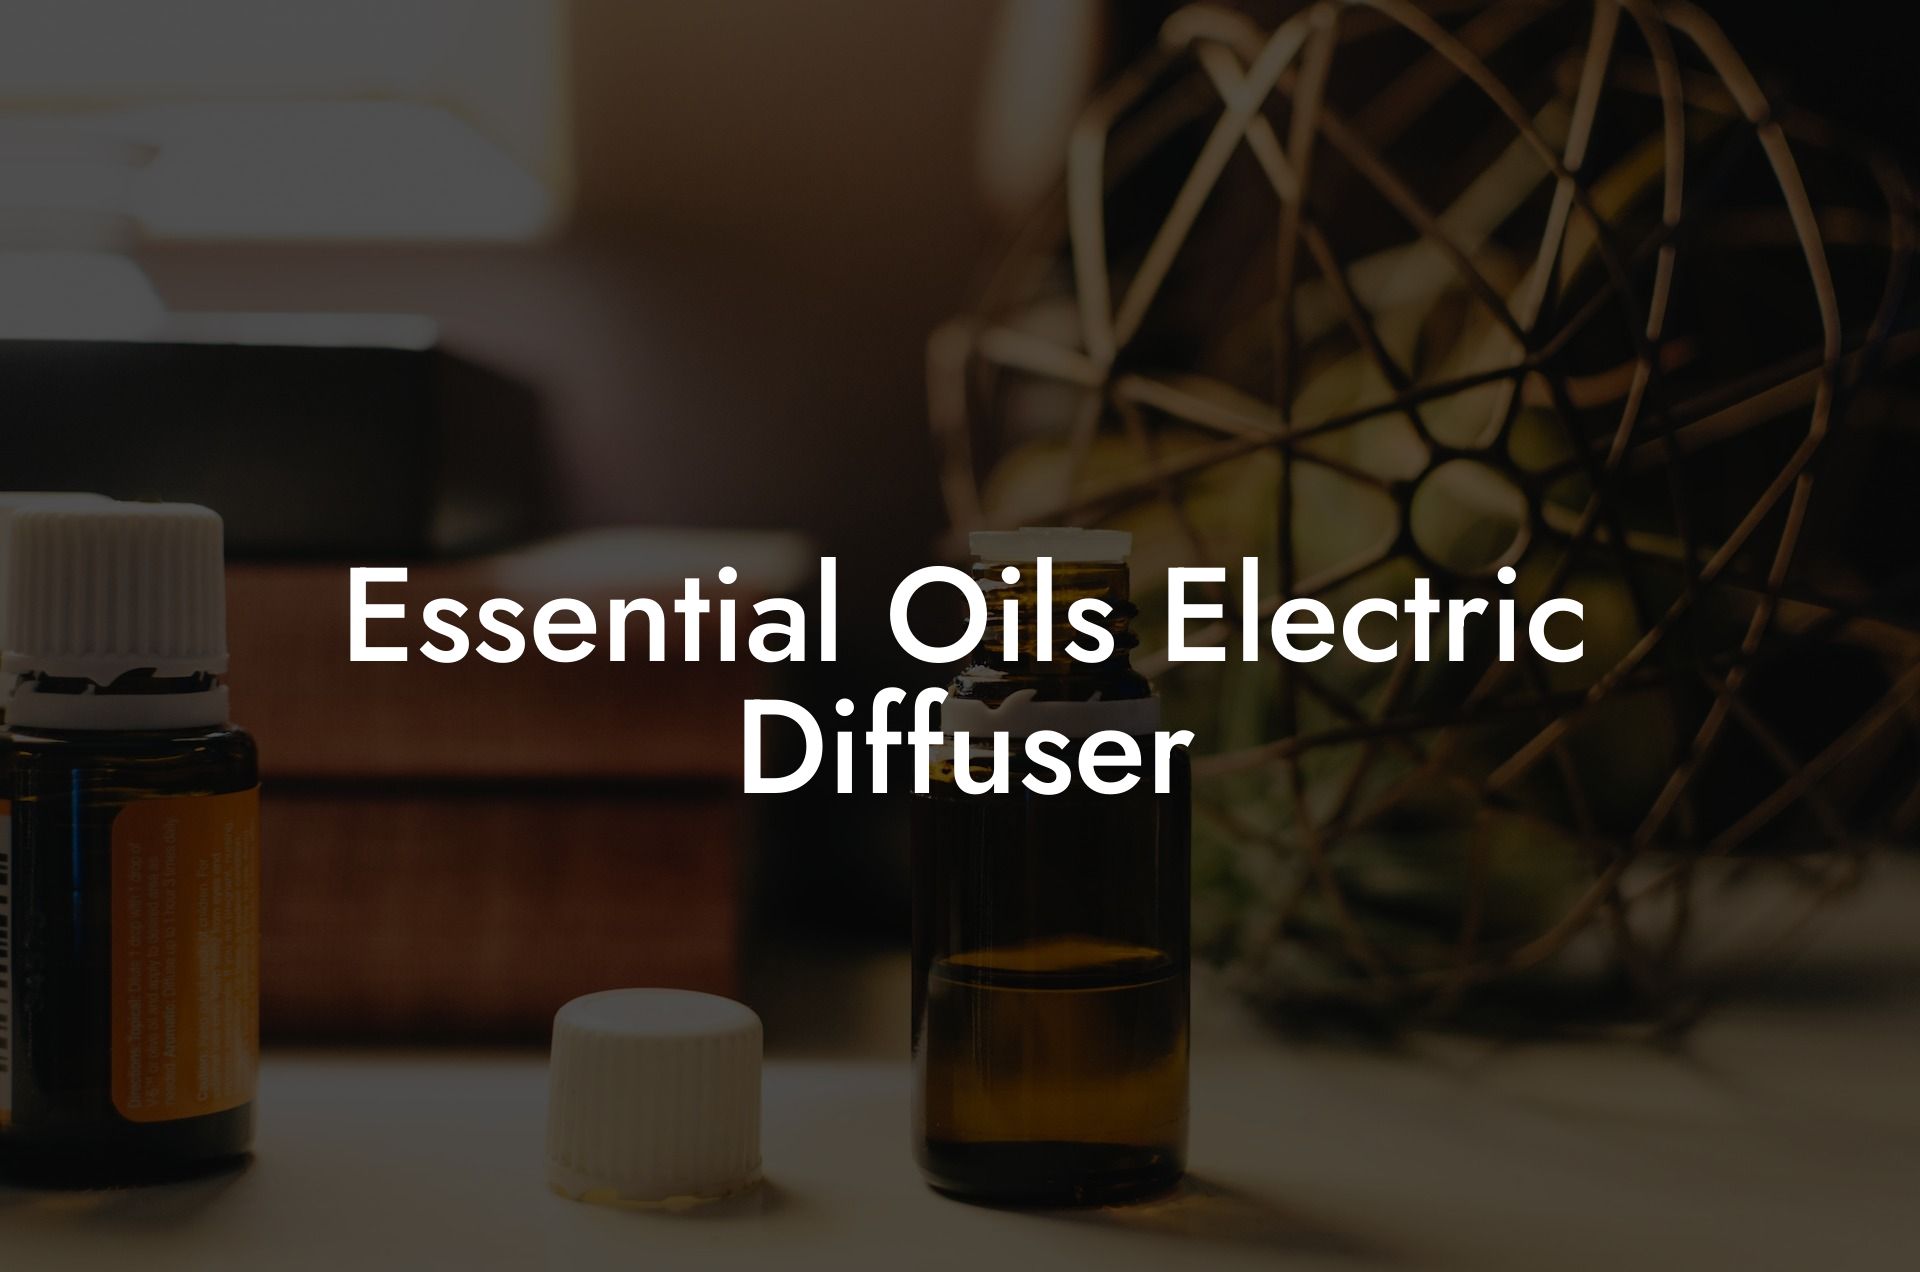 Essential Oils Electric Diffuser